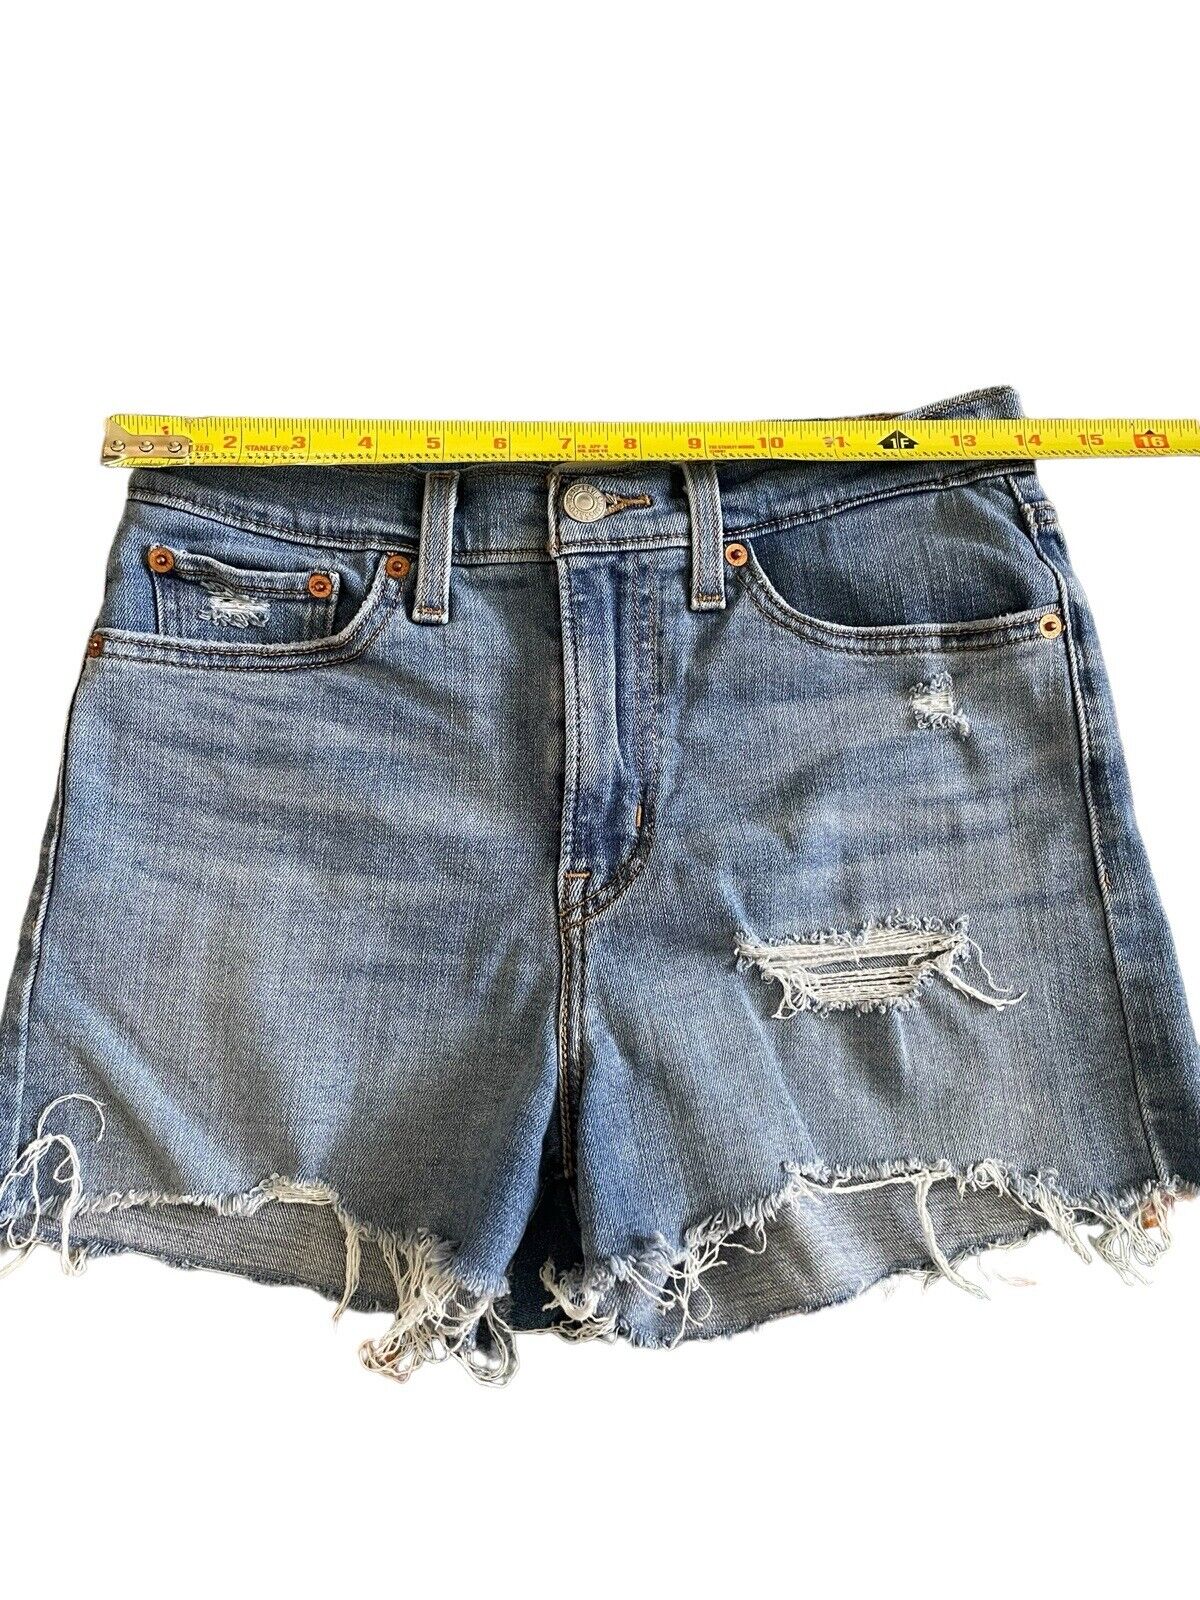 Levi's High Rise Shorts Distressed Blue Jean Cutoffs Size 28 x 2